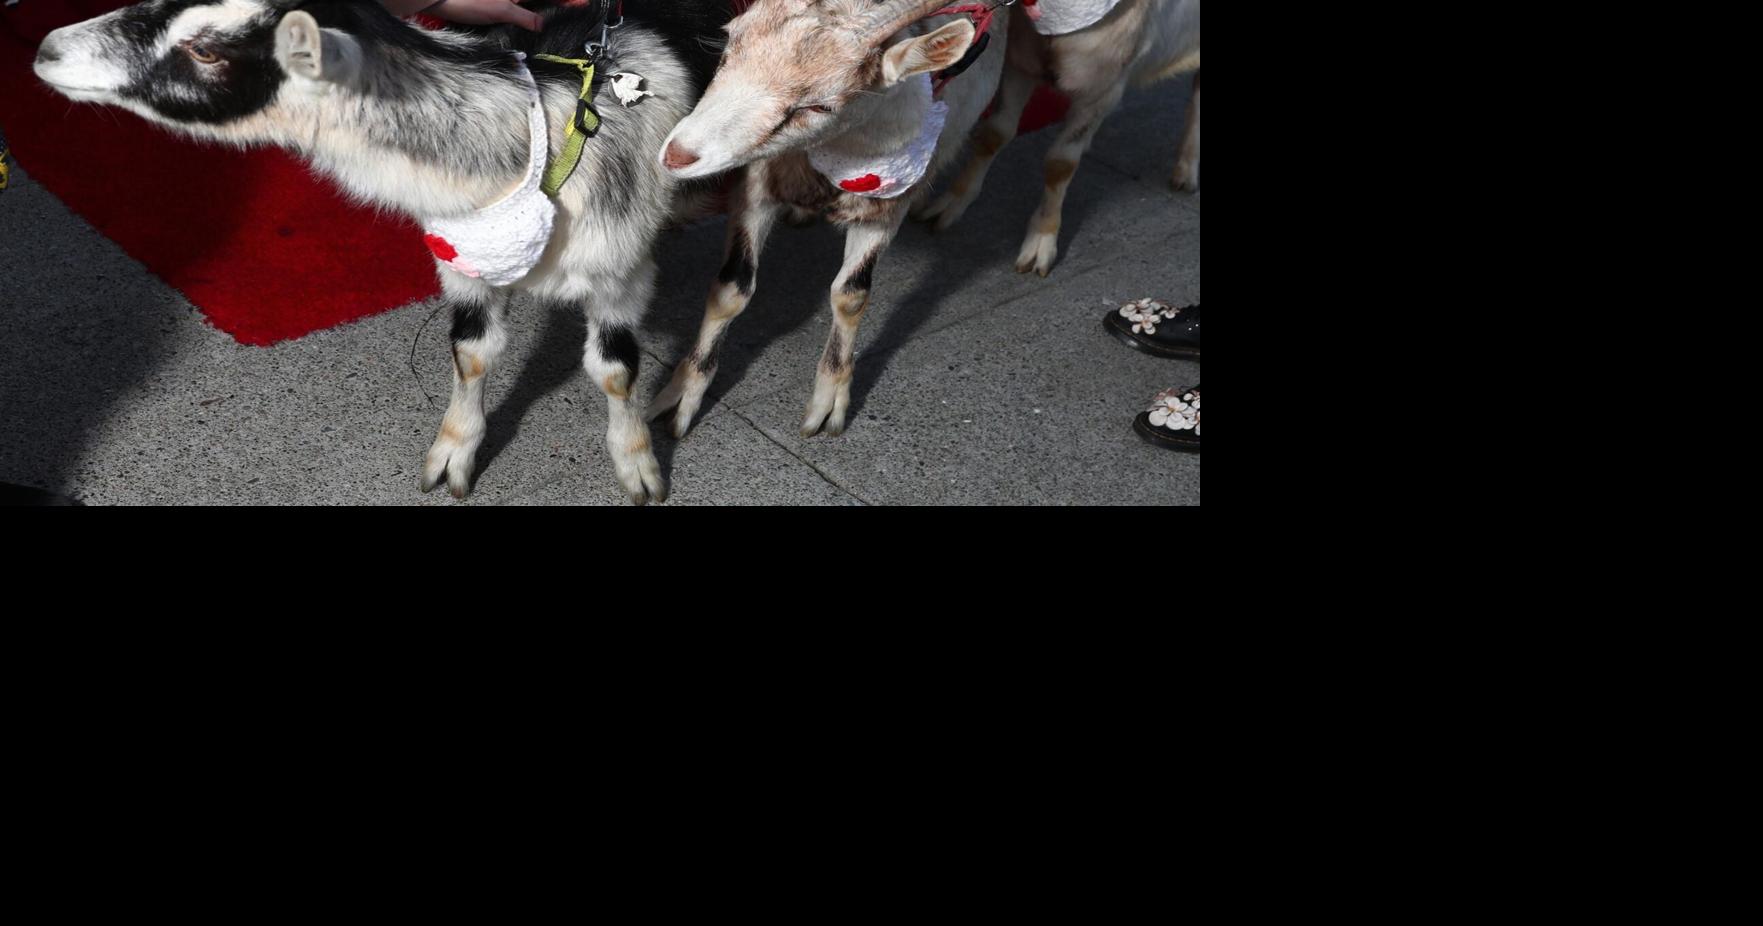 I Goat You Babe: San Francisco Goat Fashion Show Brings The Love